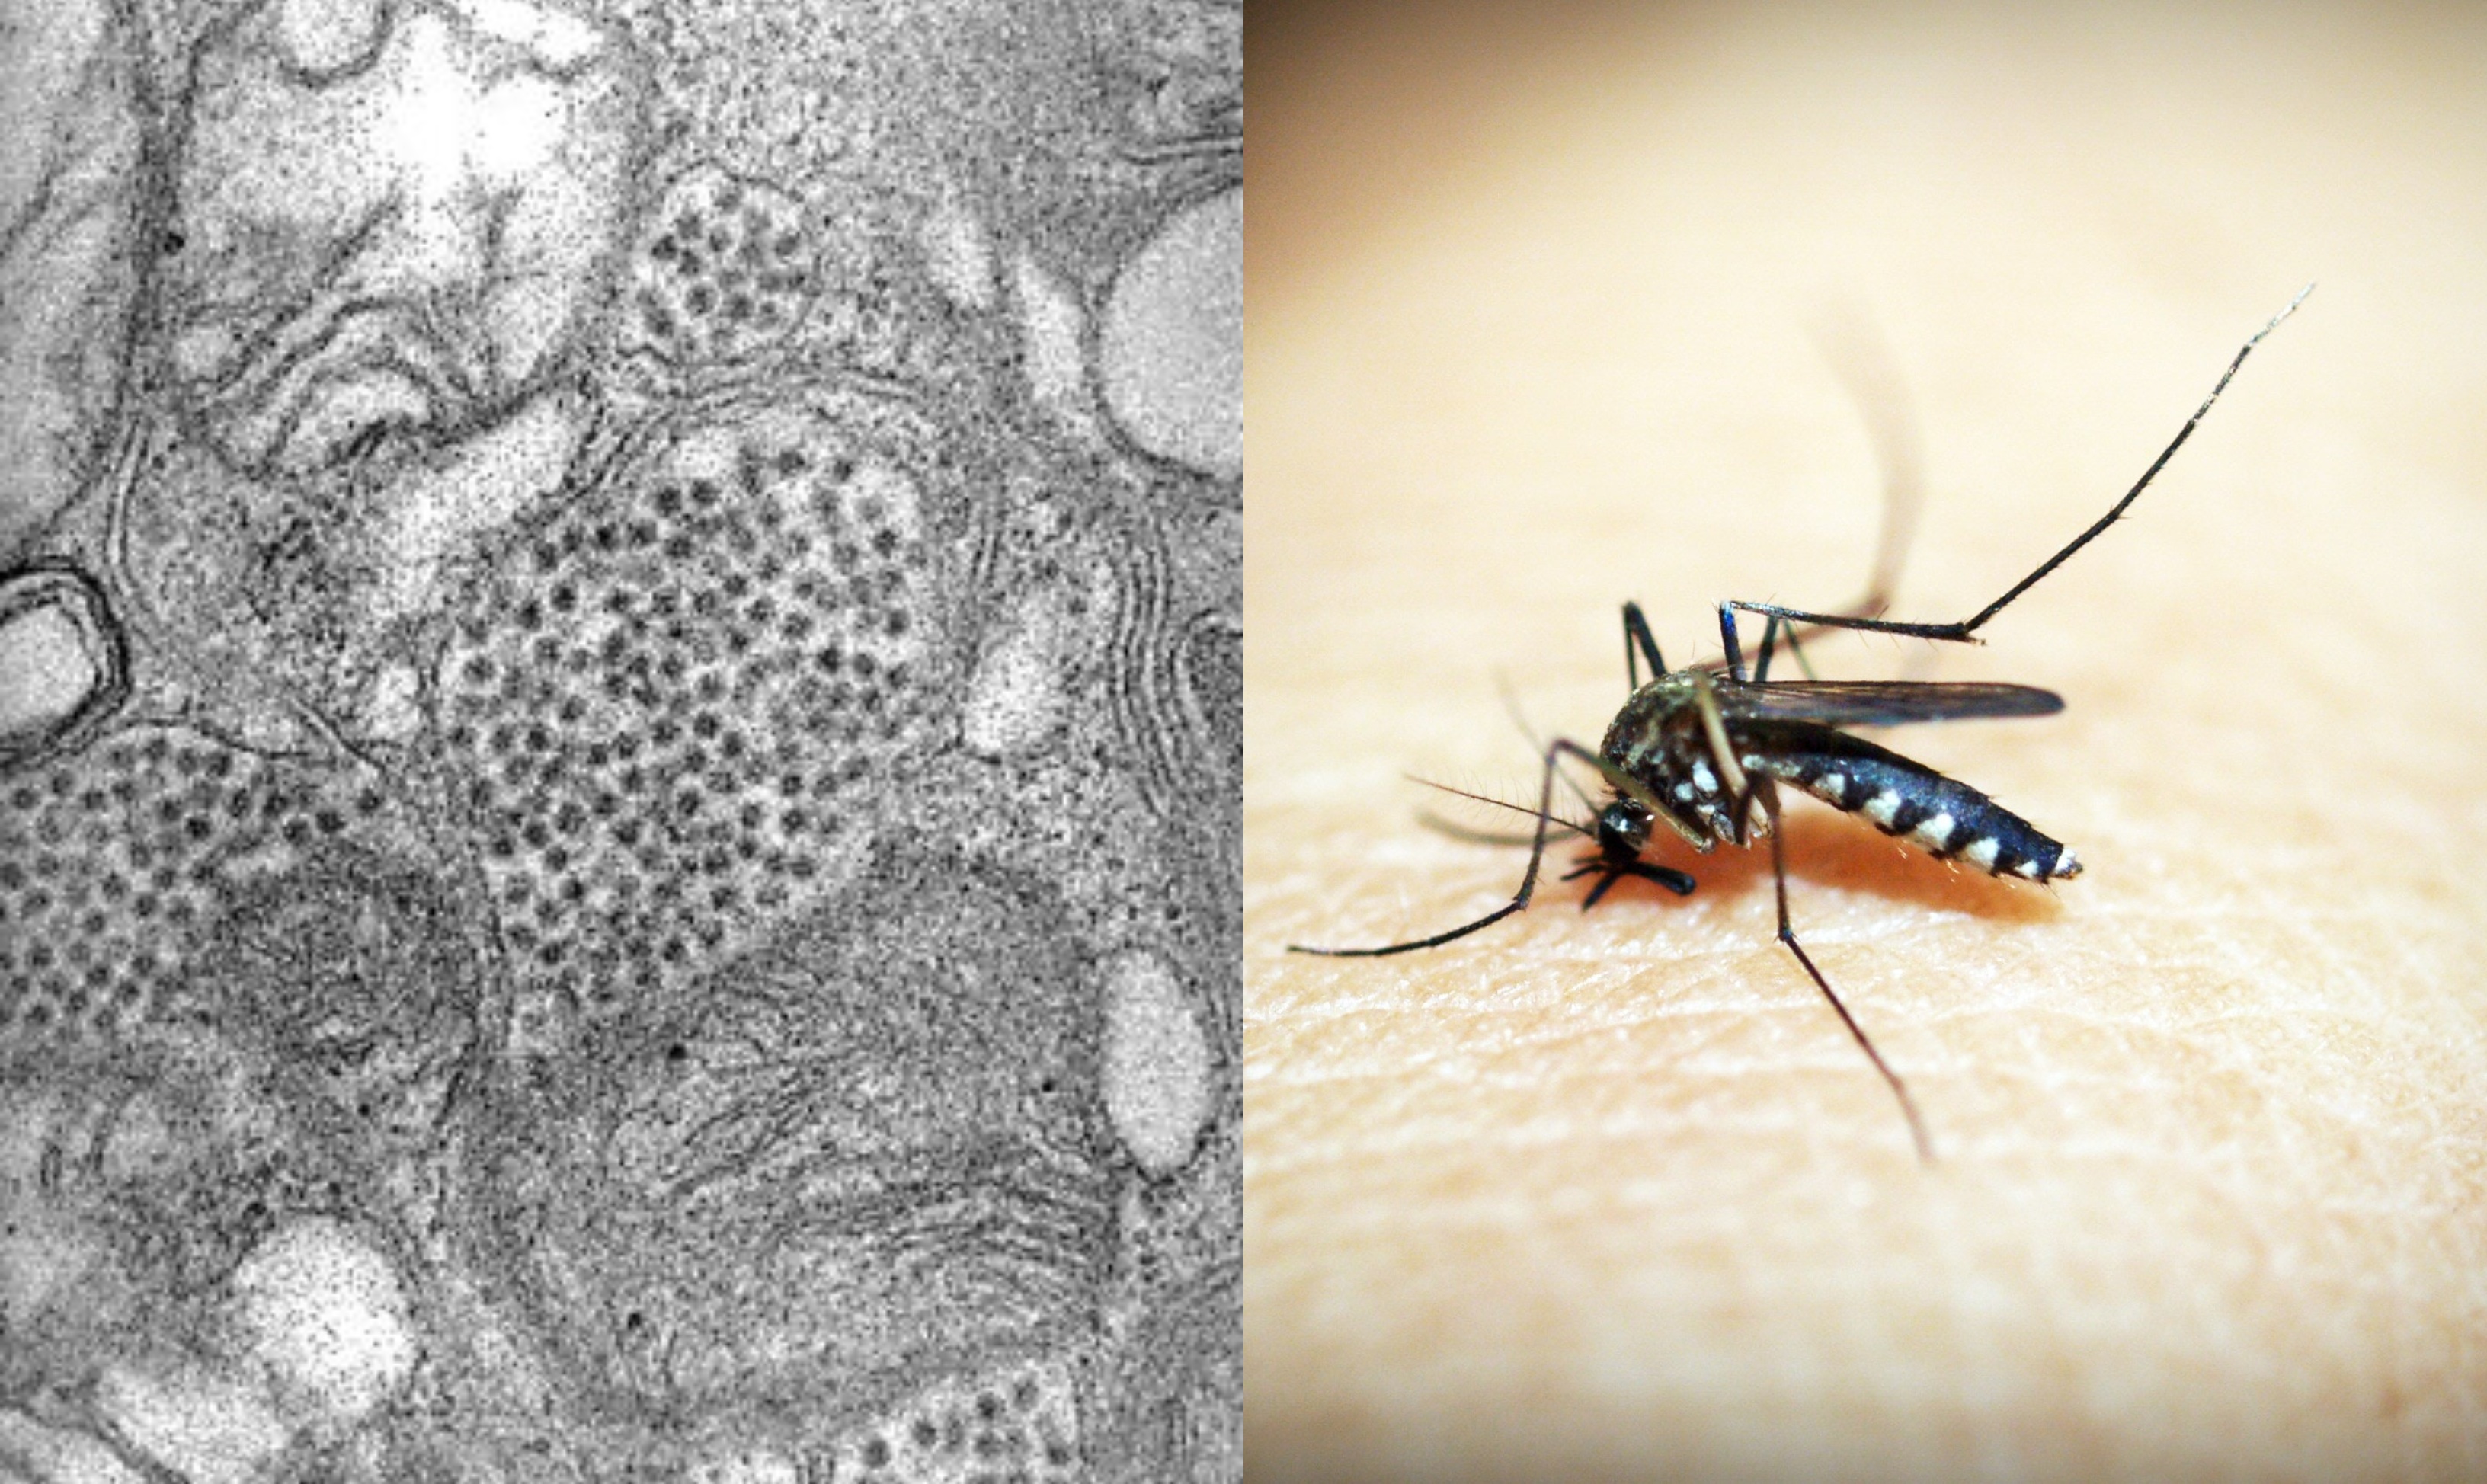 Mosquito-borne Eastern Equine Encephalitis virus: What to know